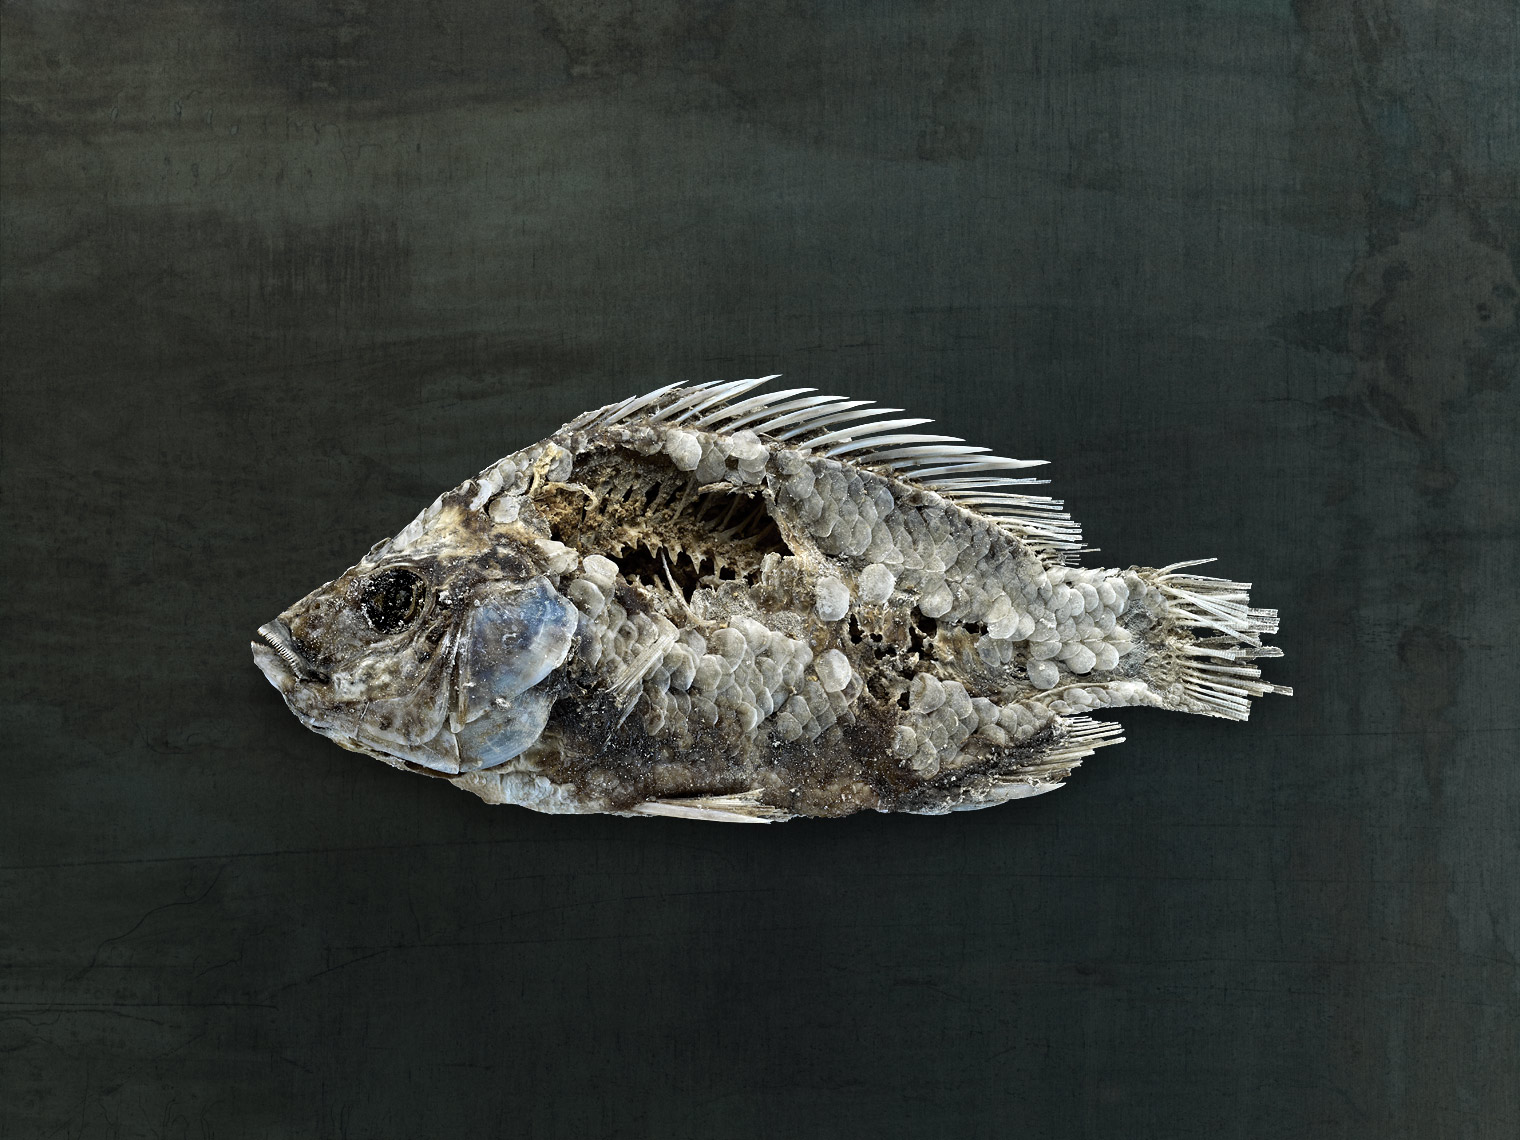 Study of Salton Sea fish by animal photographer Brad Wilson